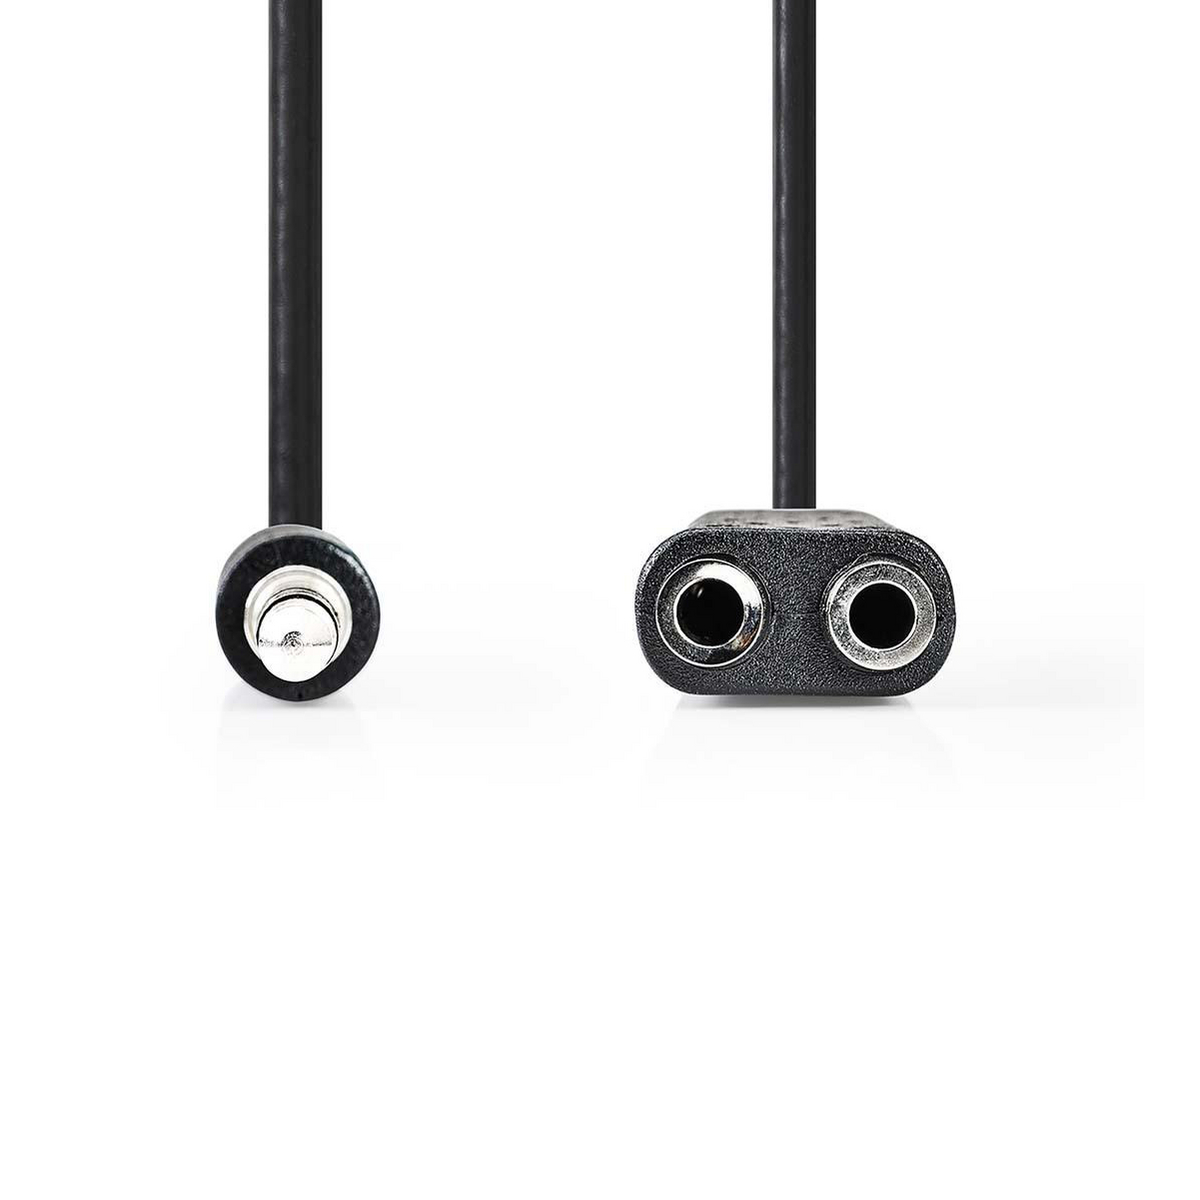 Nedis Stereo Audio kabel, 3.5 mm Male - 2x 3.5 mm Female, 0.2 m, zwart